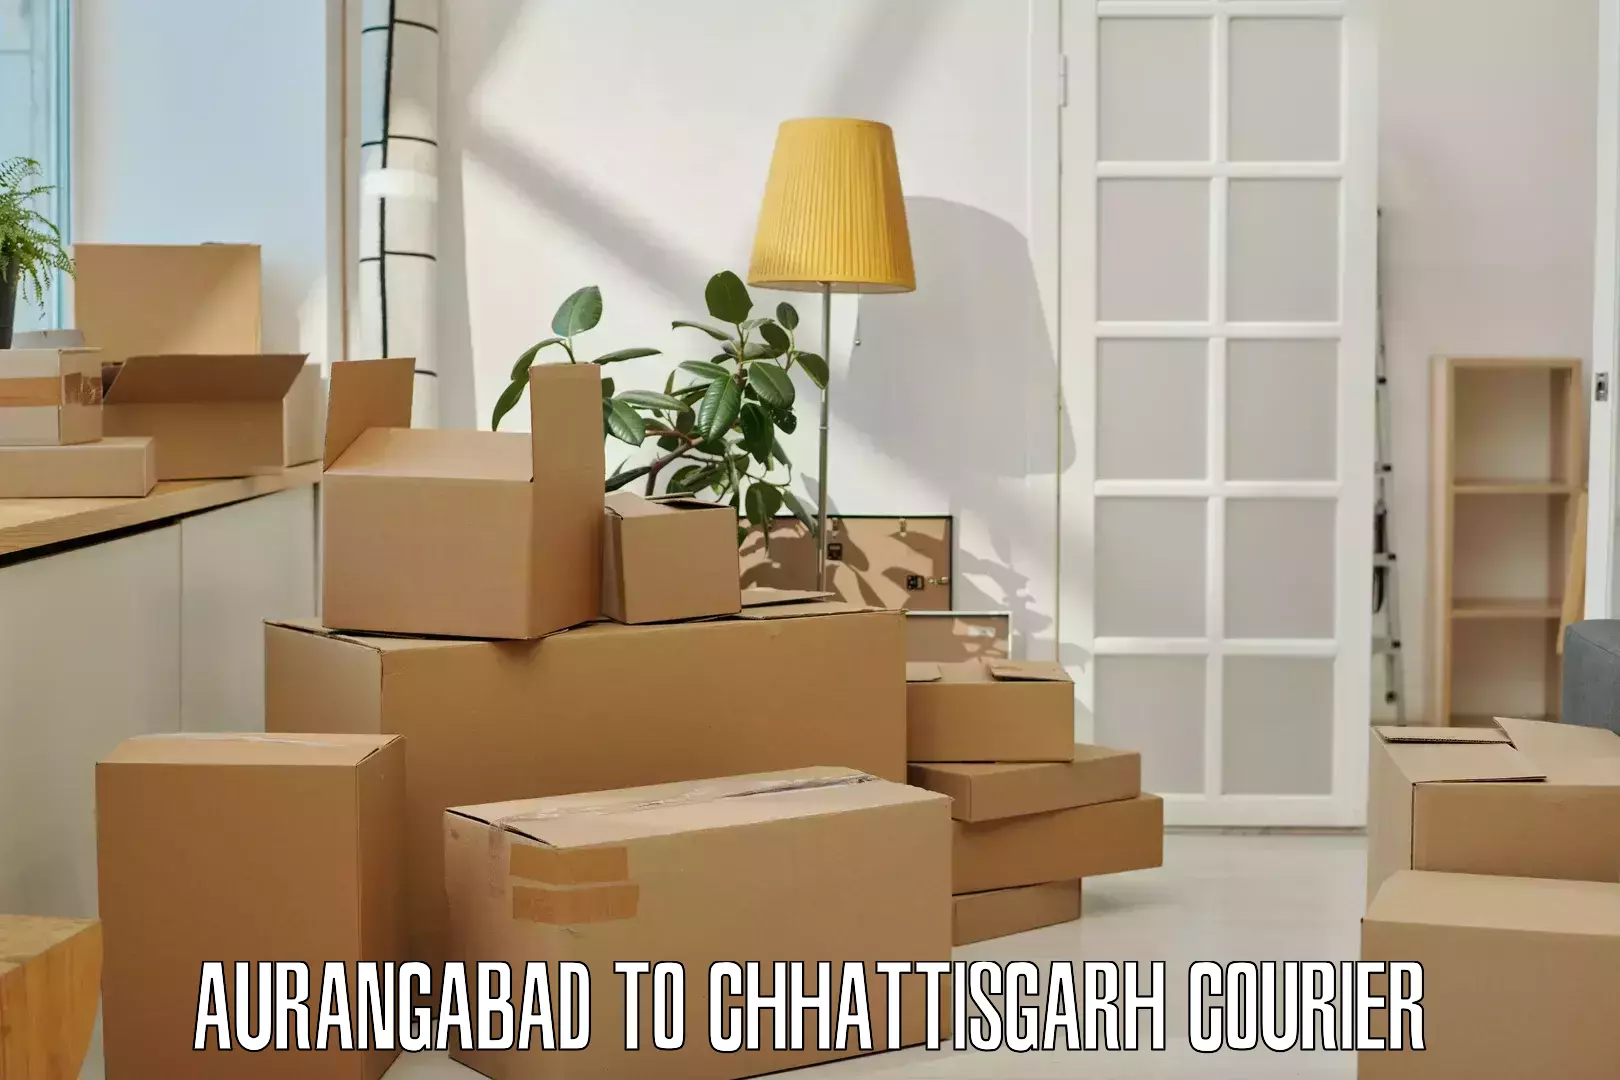 Express delivery network Aurangabad to Patna Chhattisgarh